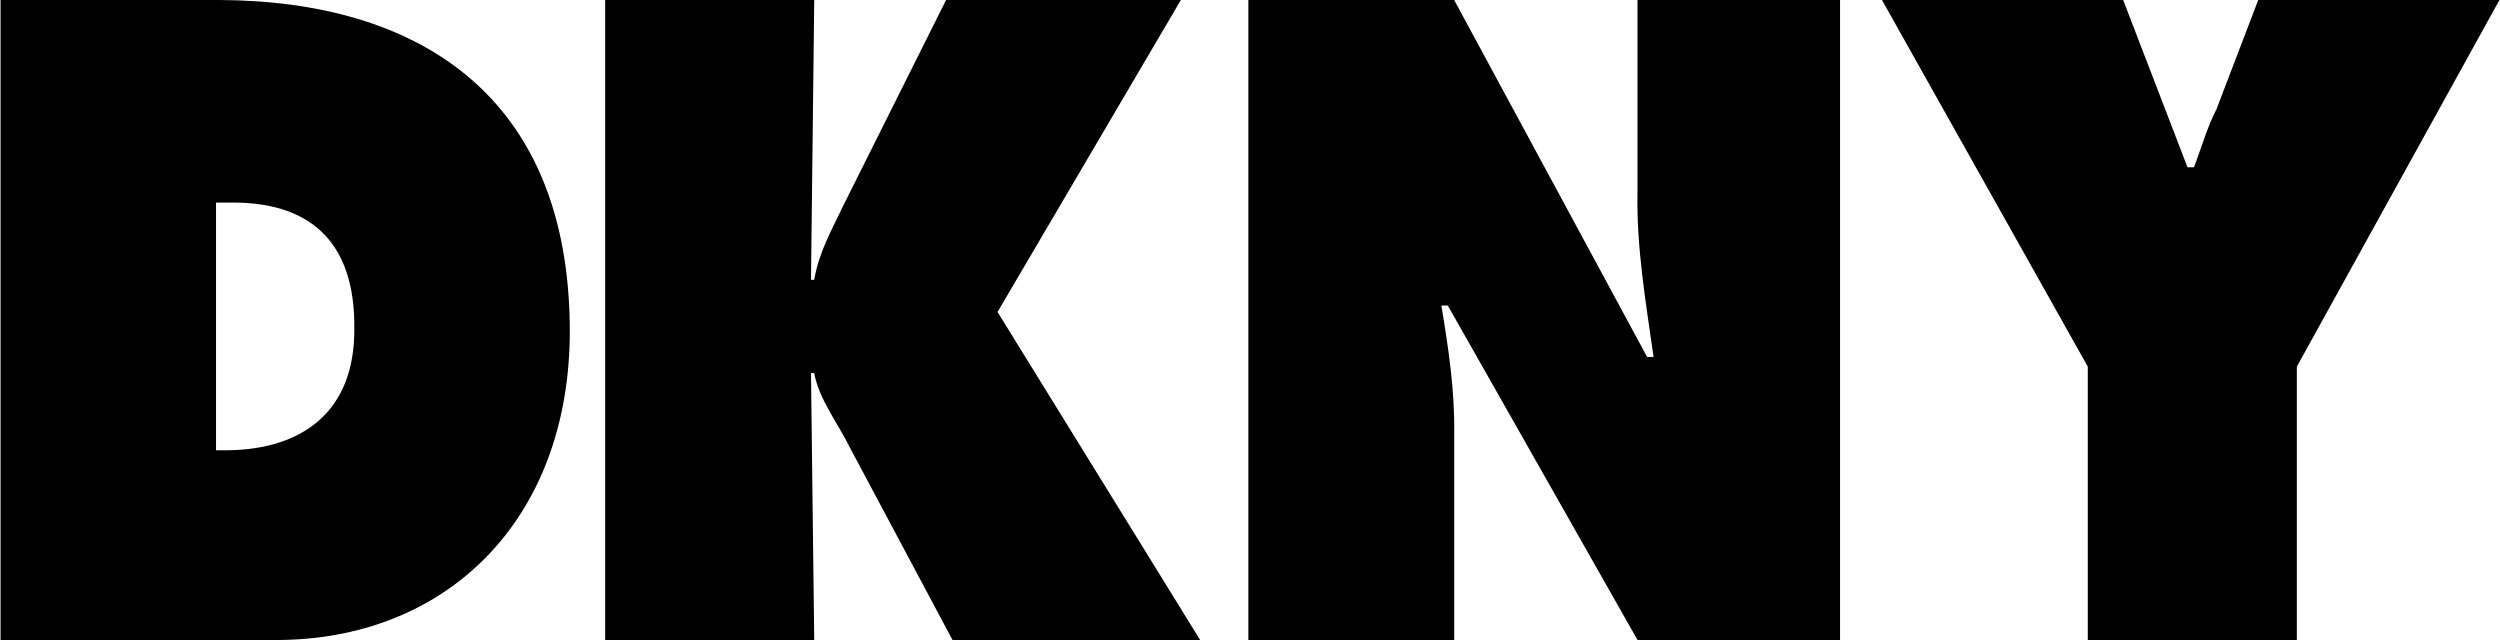 DKNY_logo.svg